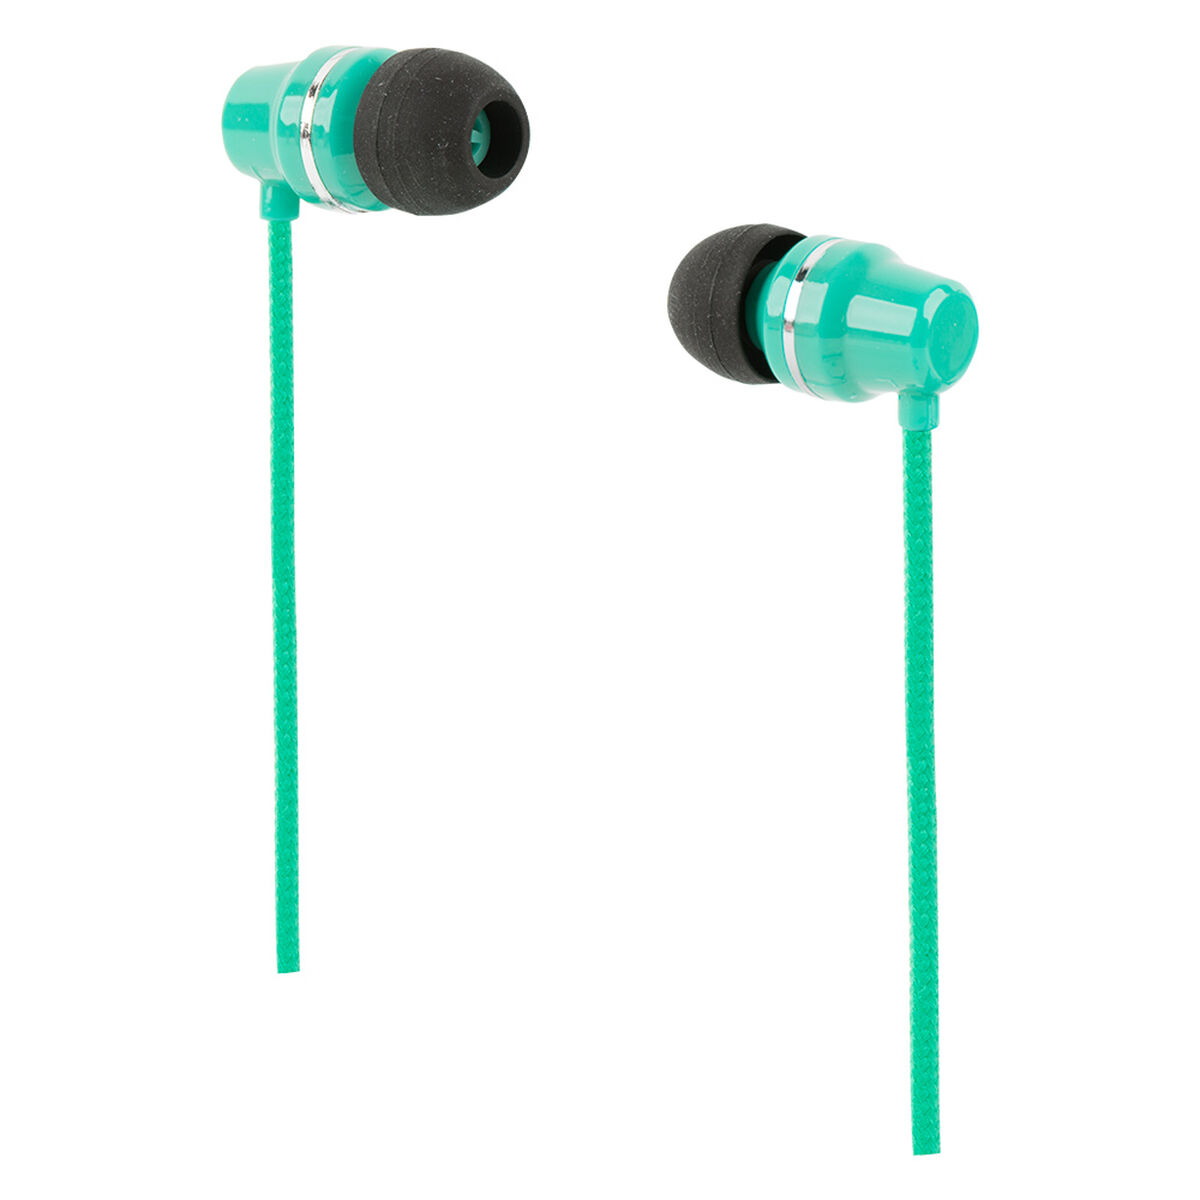 Audífonos Vivitar Wired Earbuds VF40018 Verde Menta 